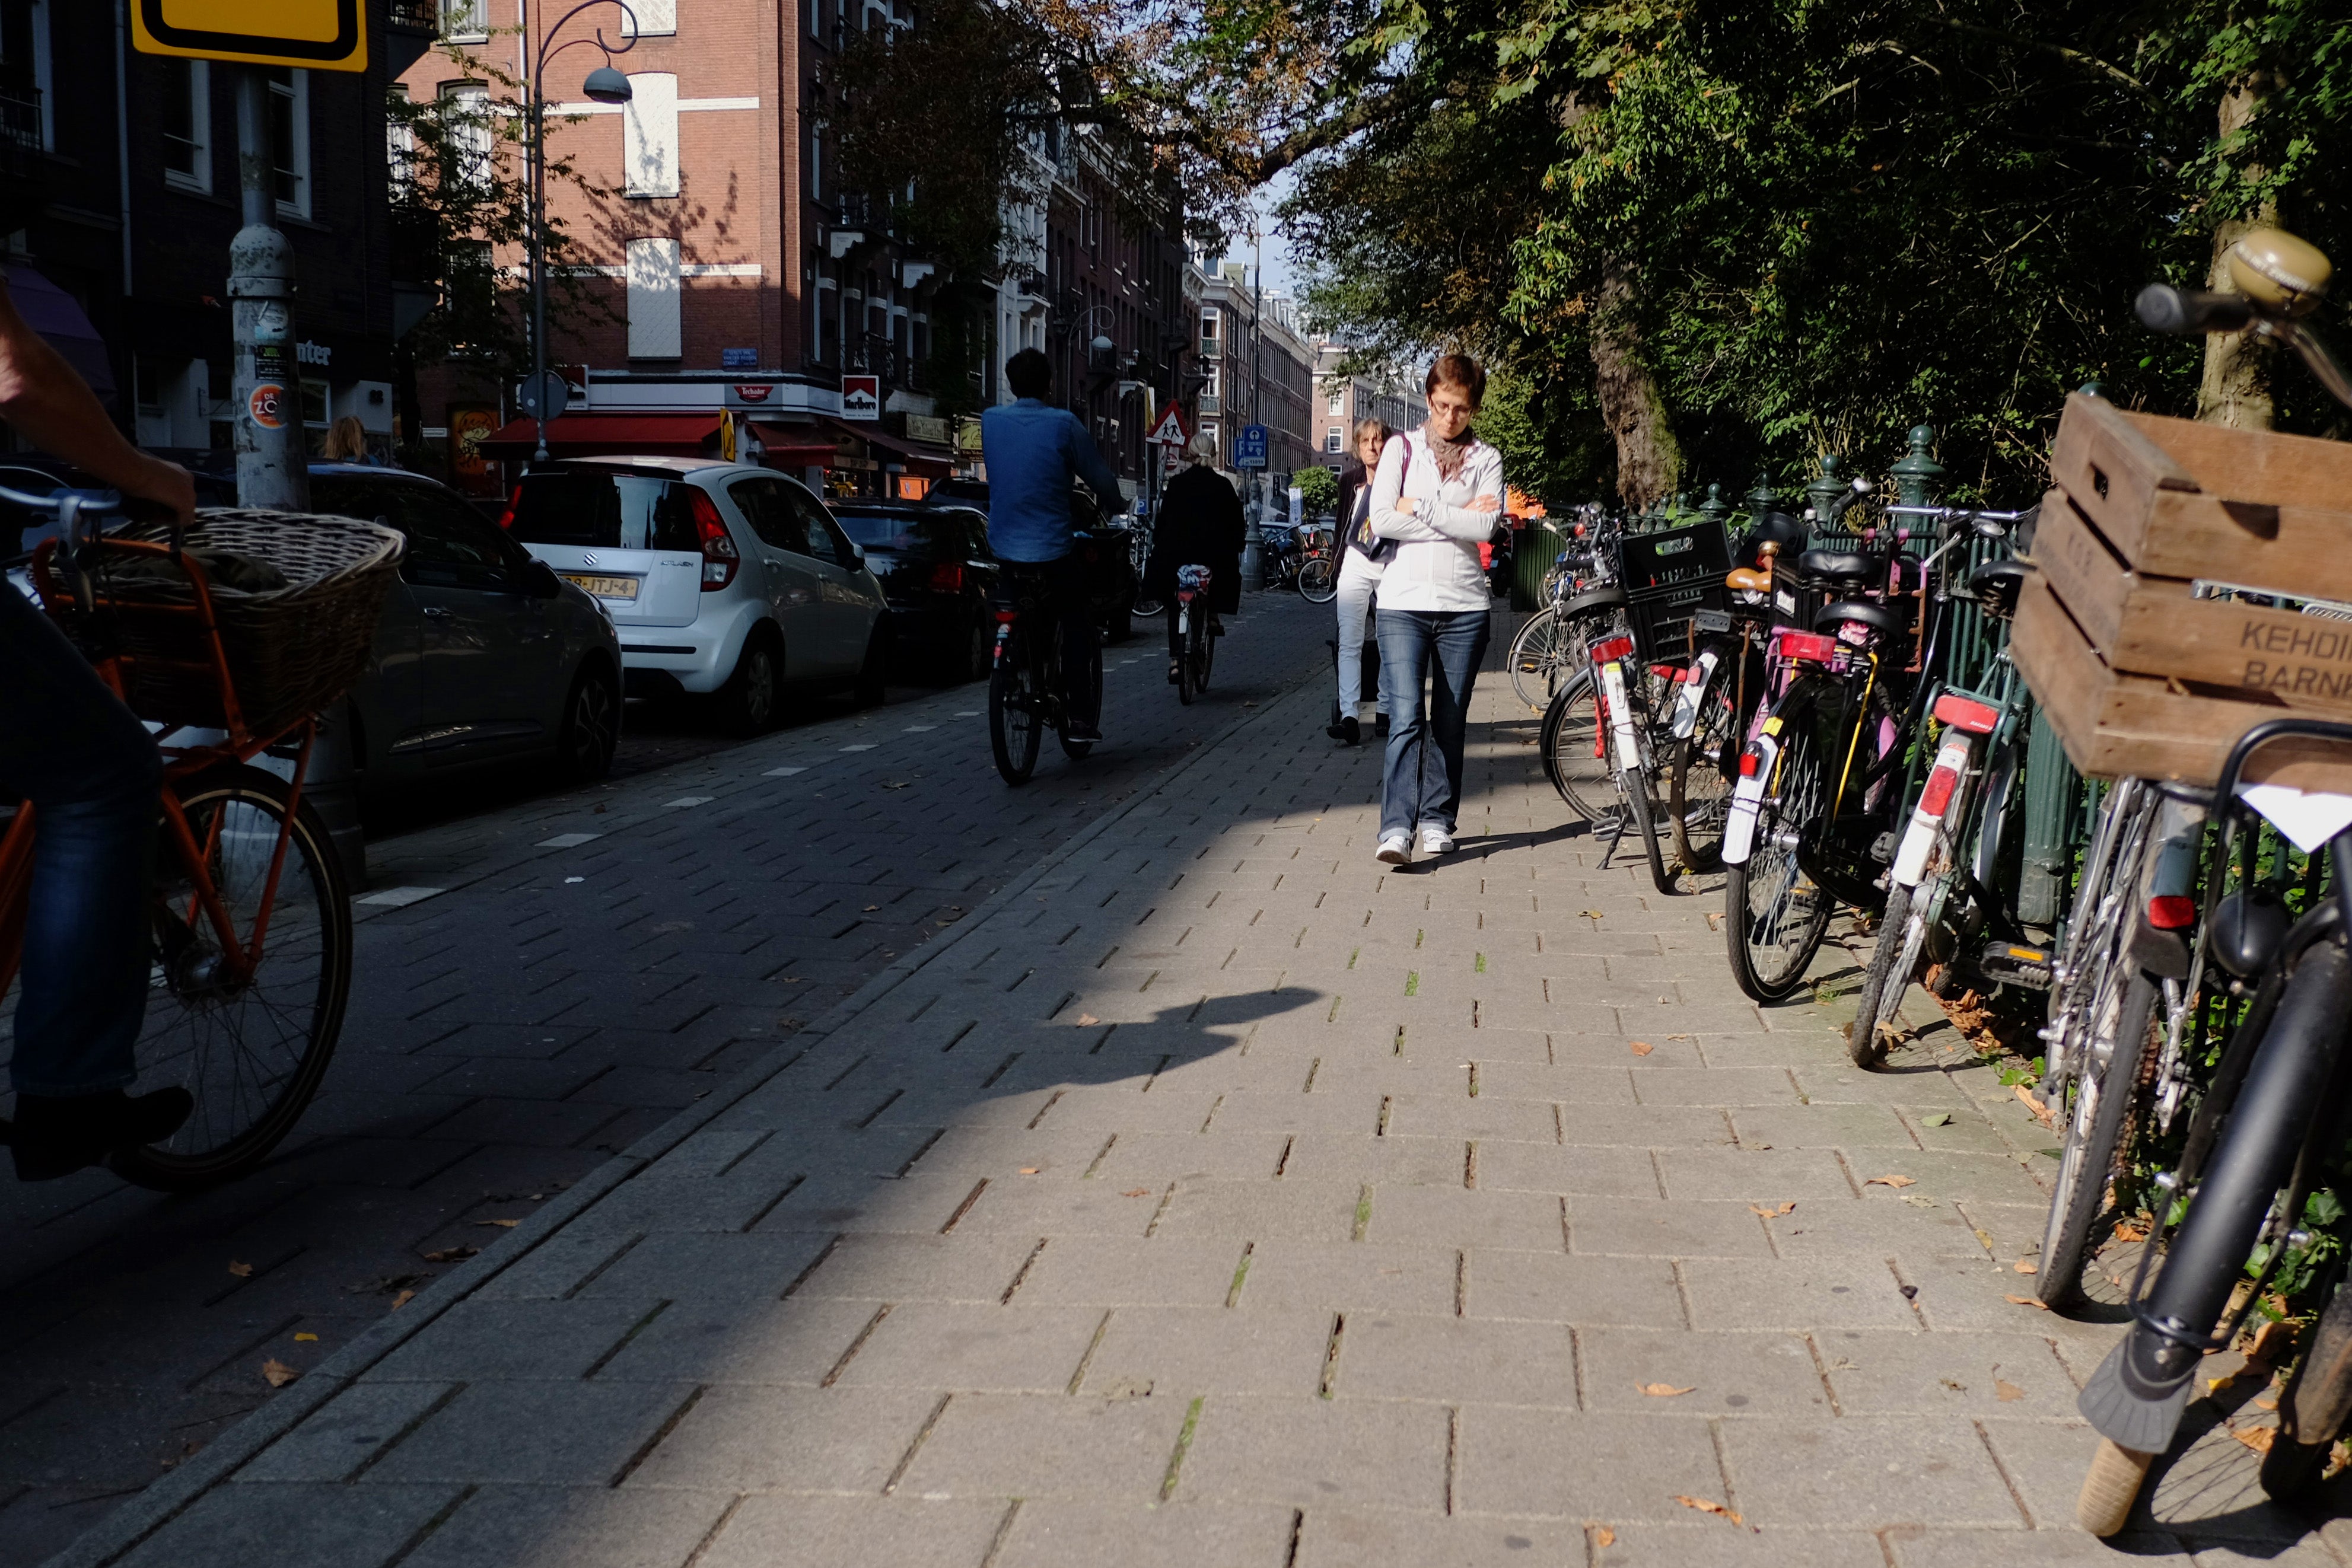 Parking, bike lane, sidewalk, fence in Amsterdam.